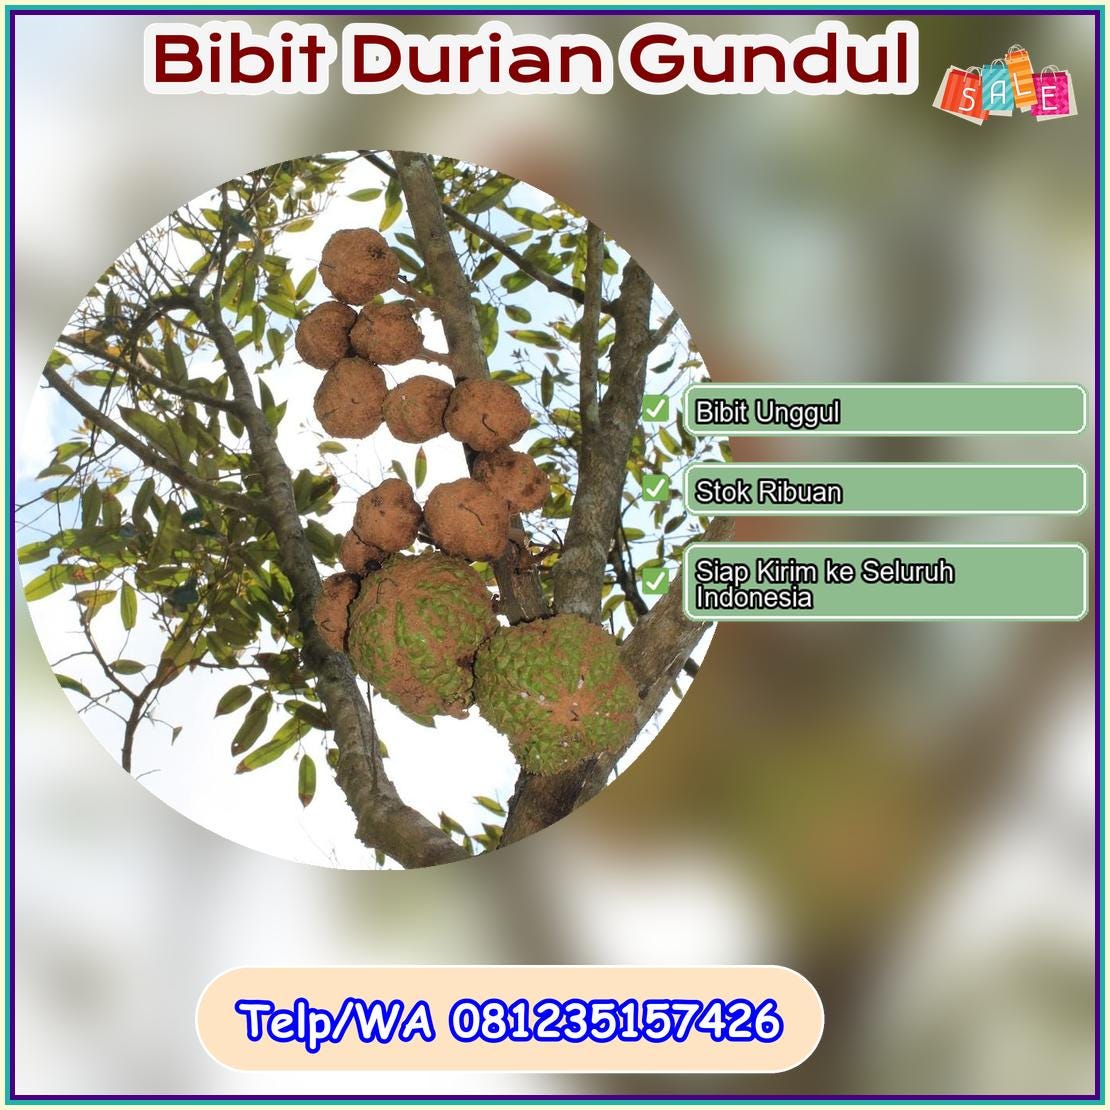 Supplier Bibit Durian Gundul Ogan Komering Ulu Timur